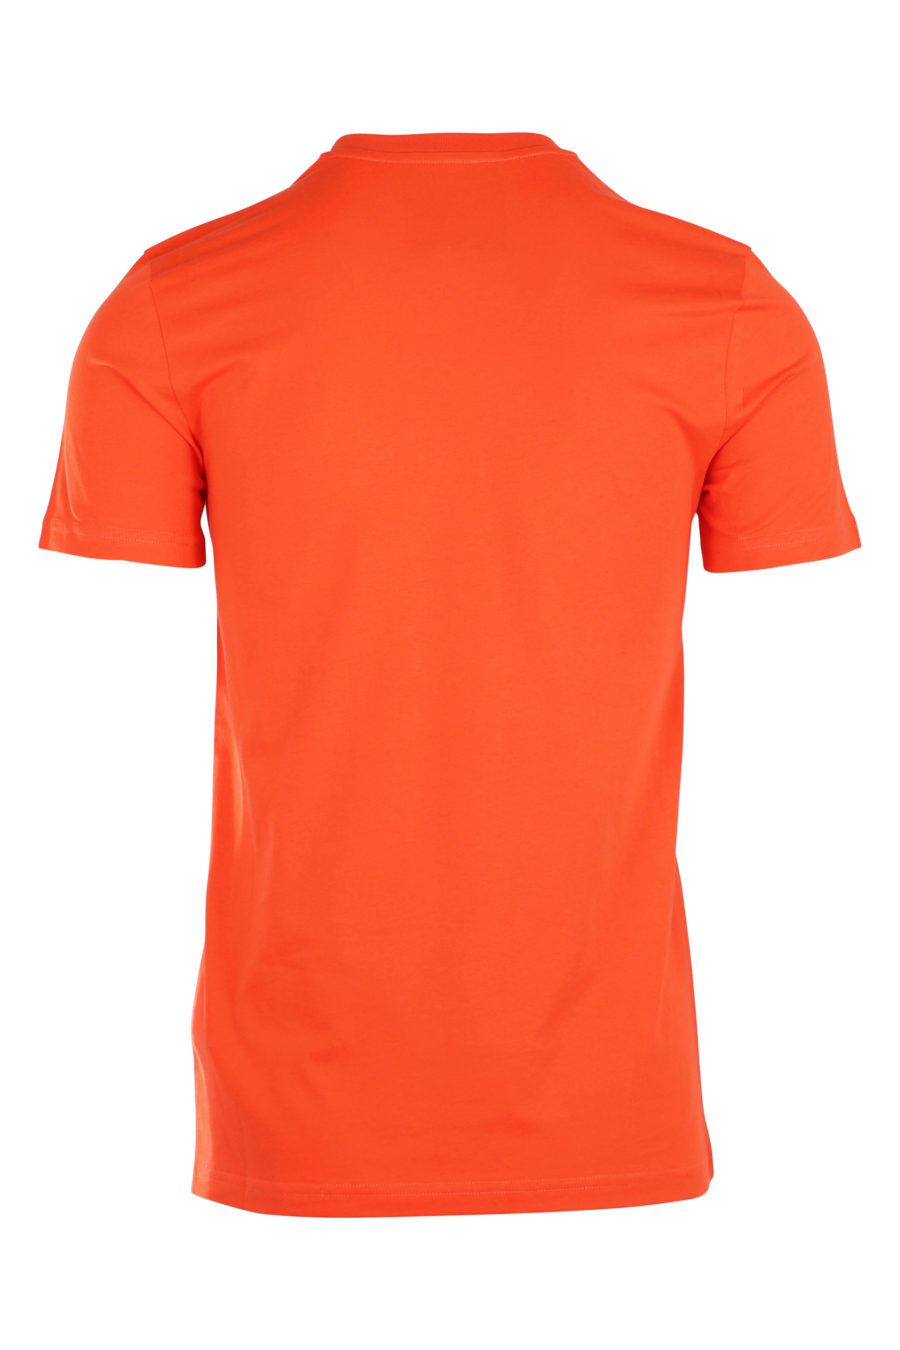 Camiseta anaranjada con logotipo grande "fantasy" - IMG 9938 1